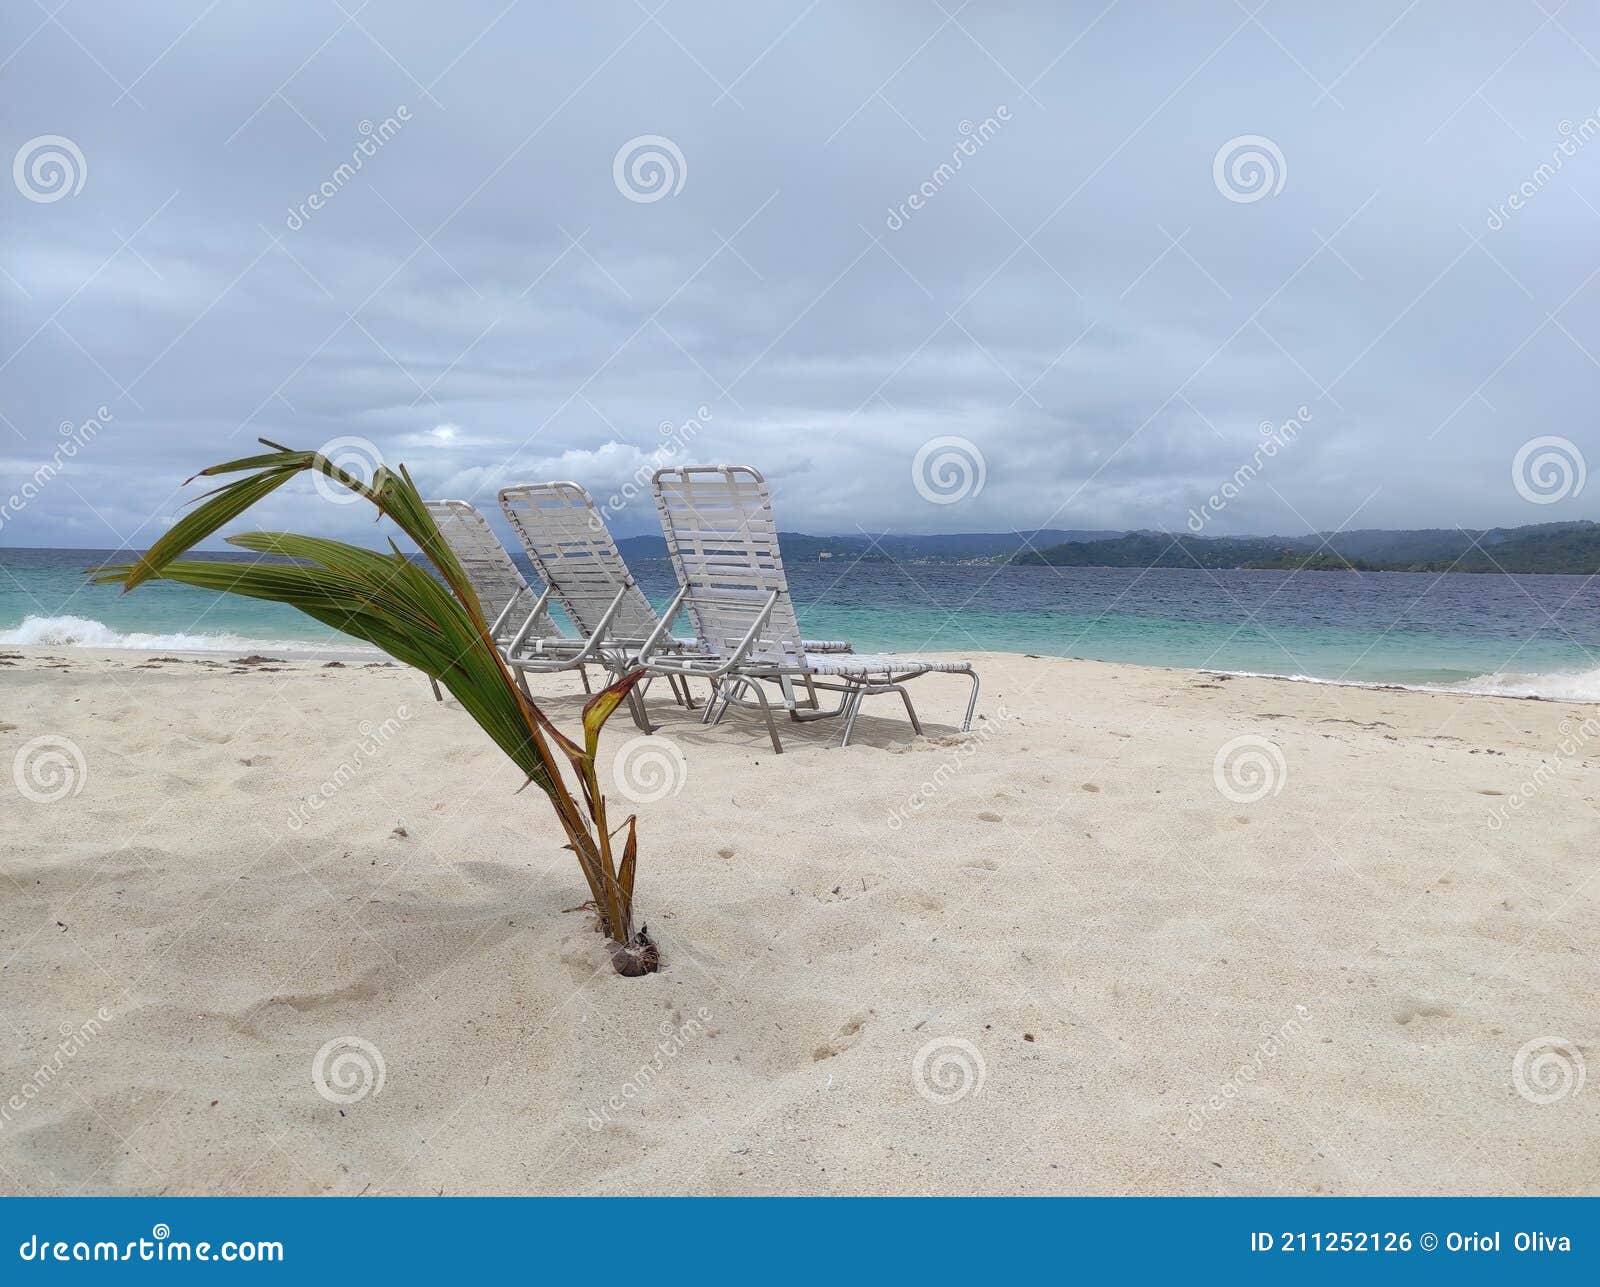 beach in the caribbean sea. punta cana. isla saona